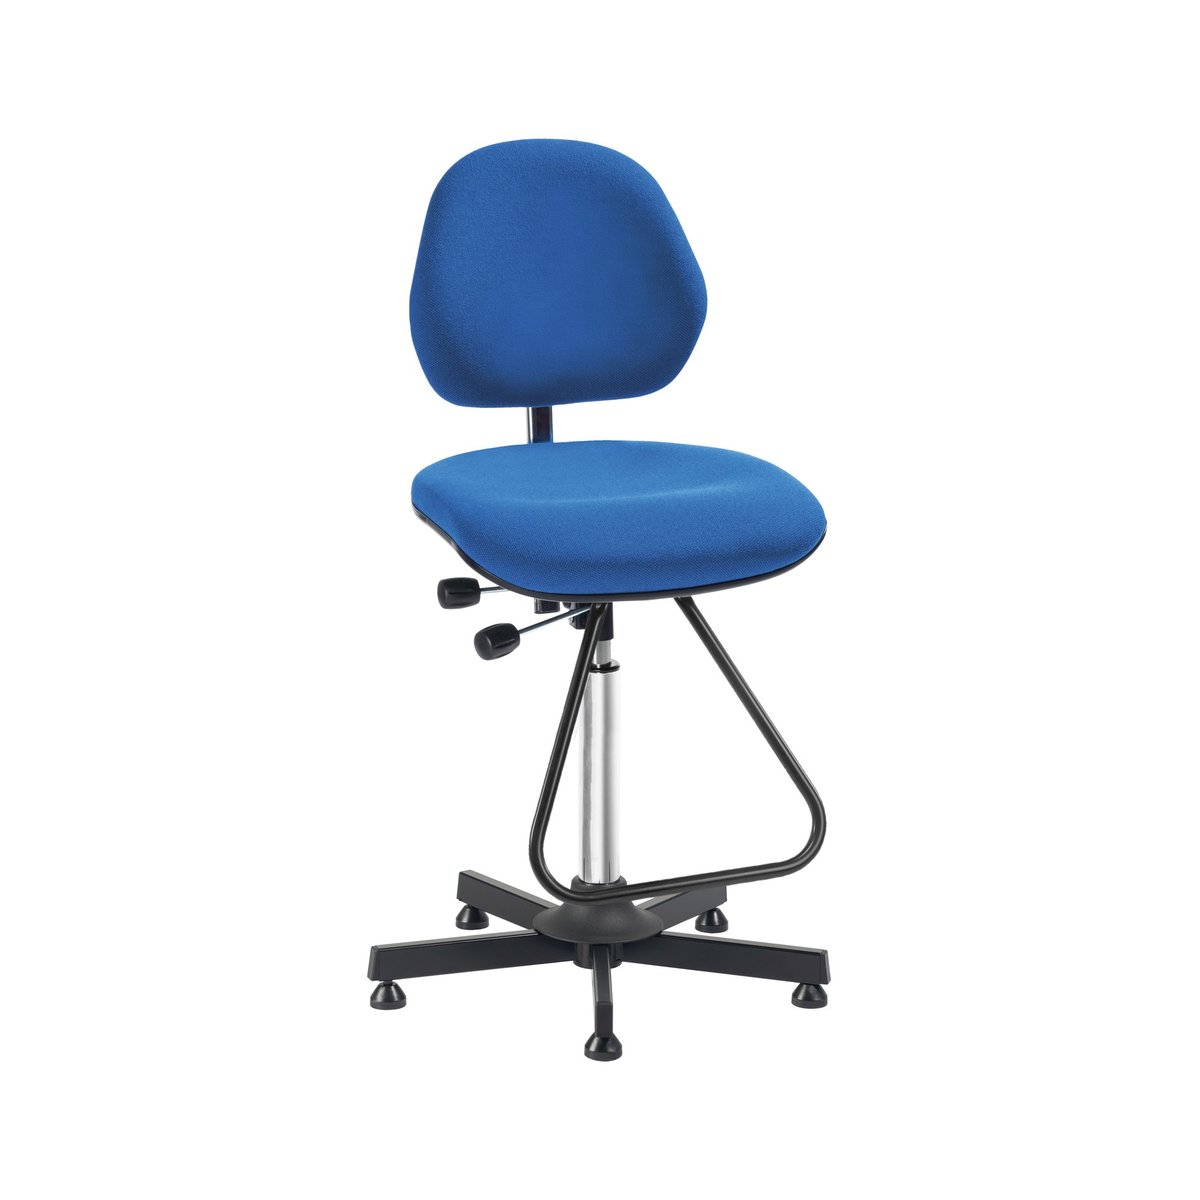 88601011 - Industrial chair